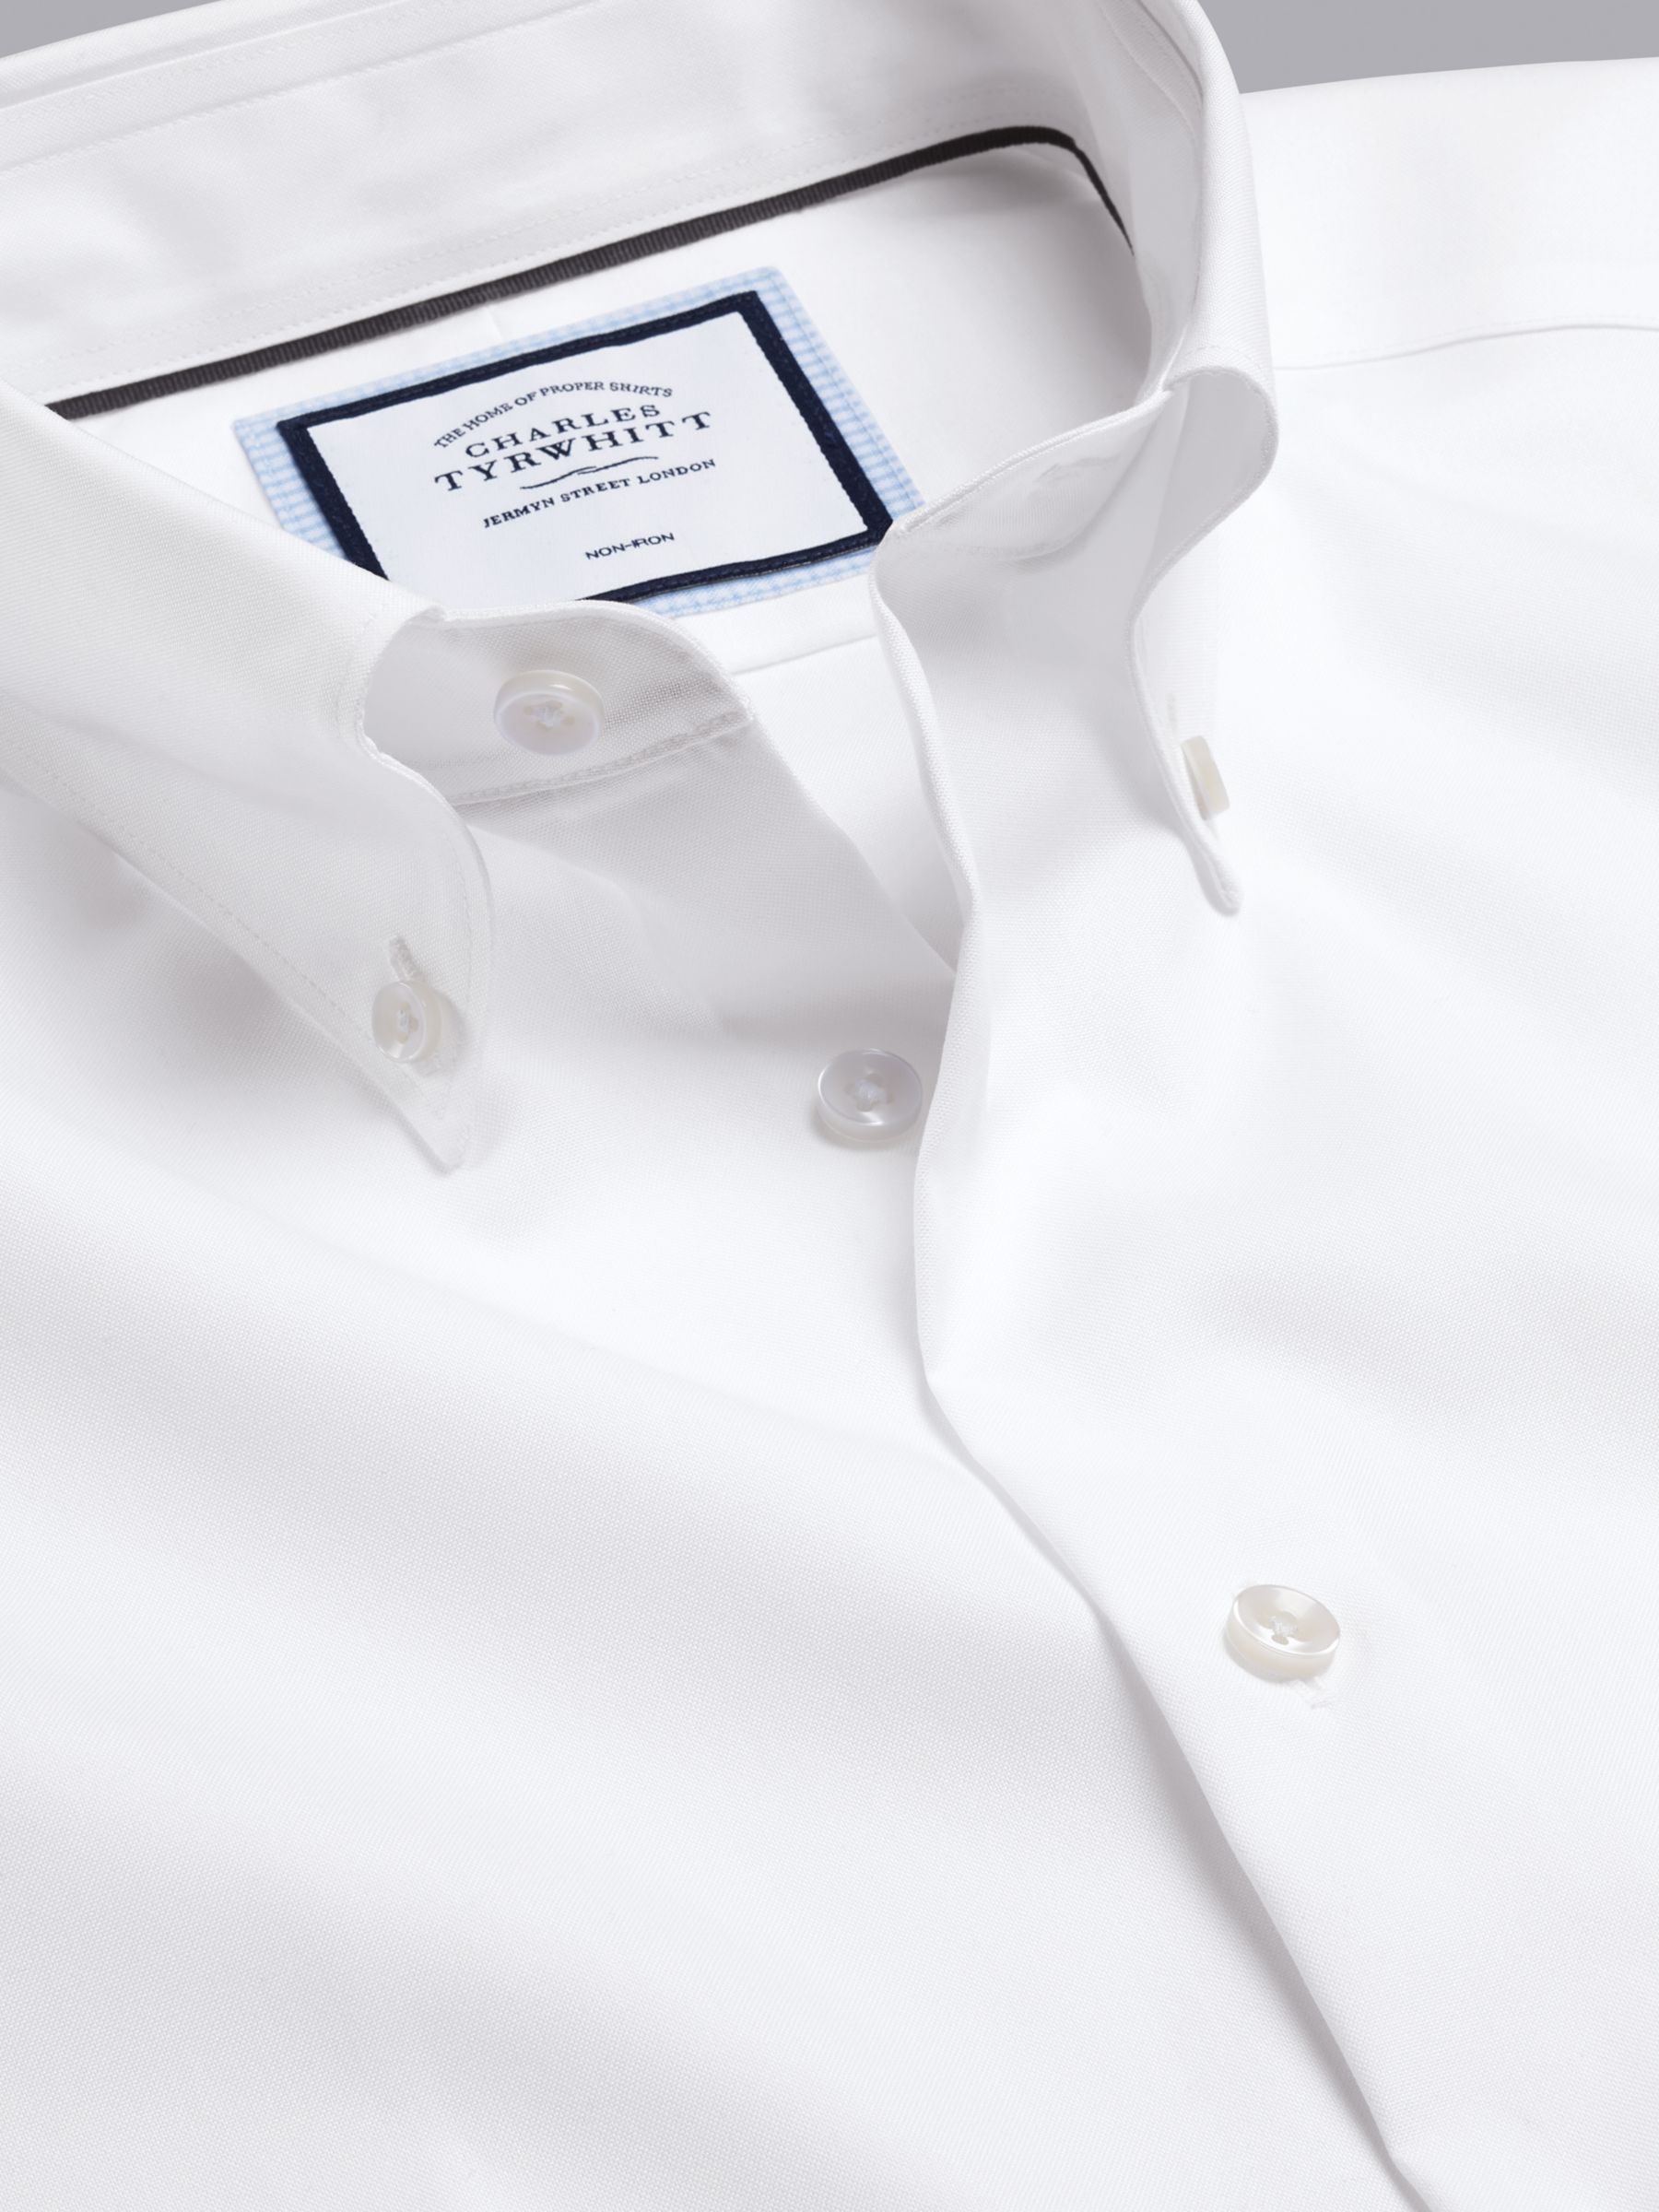 Charles Tyrwhitt Button-Down Collar Non-Iron Slim Fit Shirt, White, 15.5 34